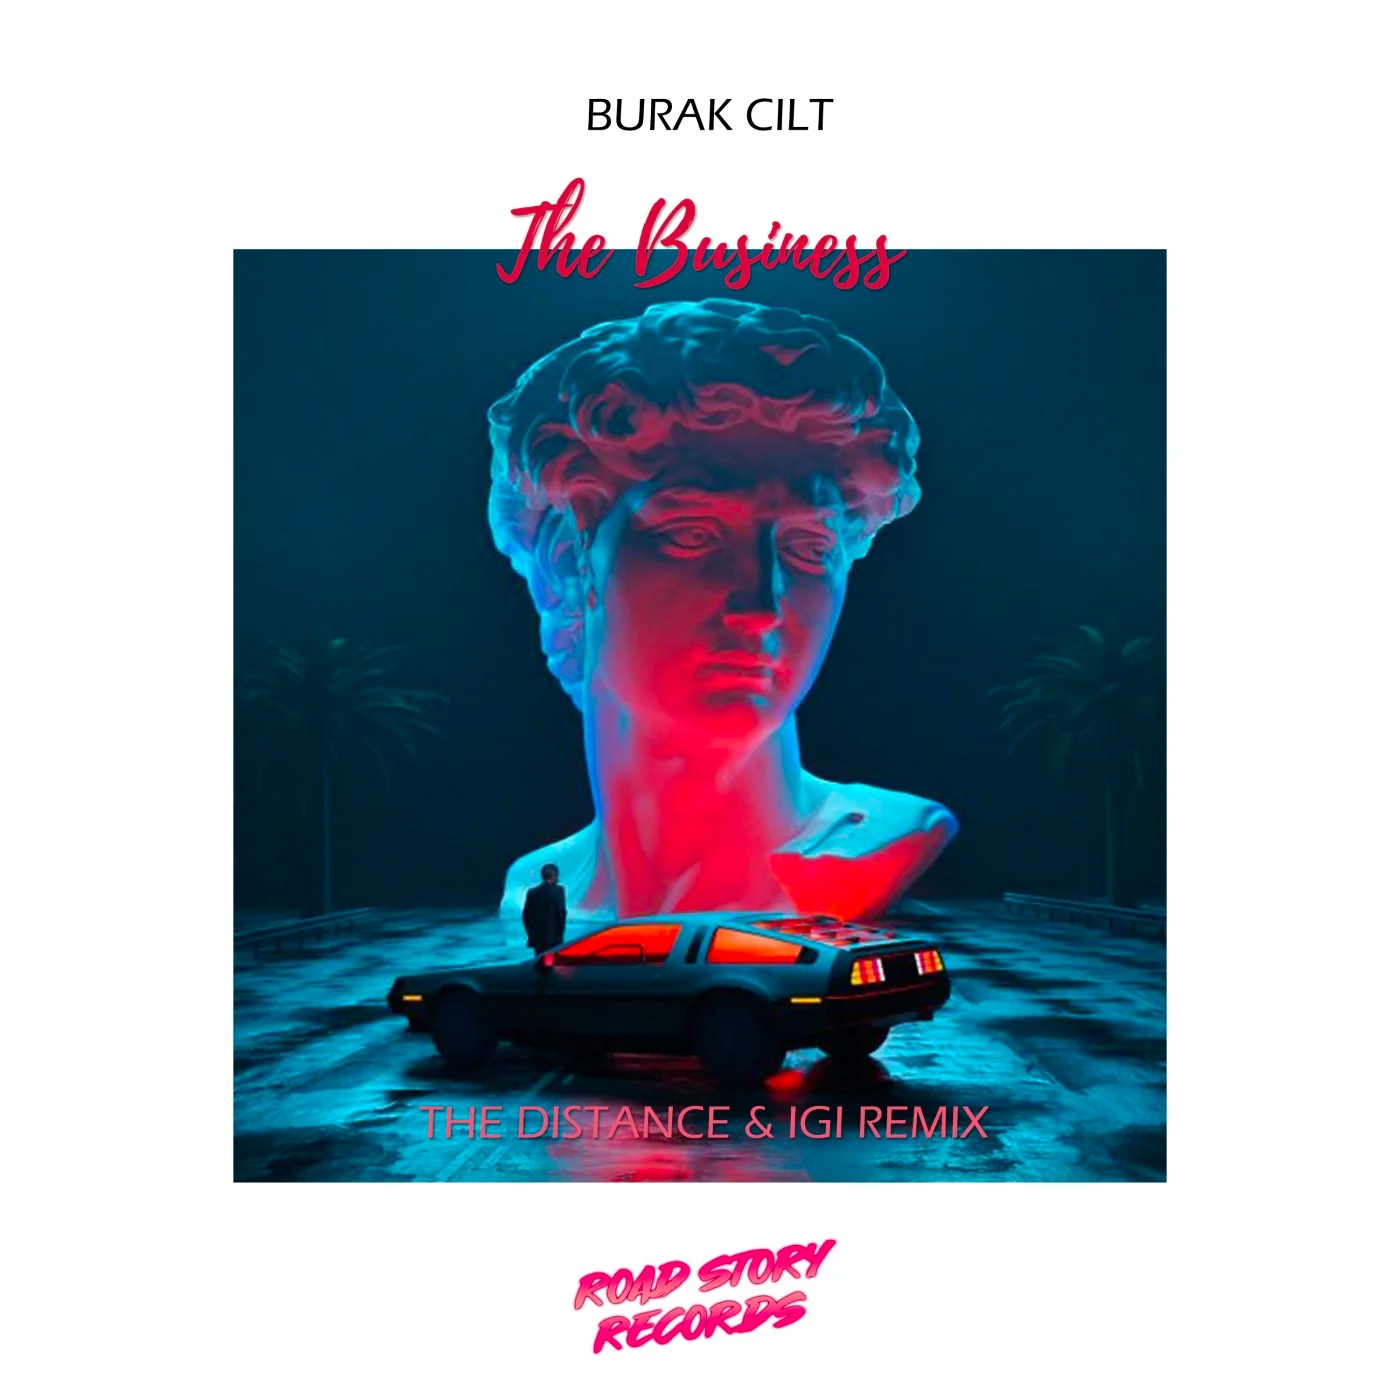 Burak Cilt - The Business (The Distance & Igi Remix)